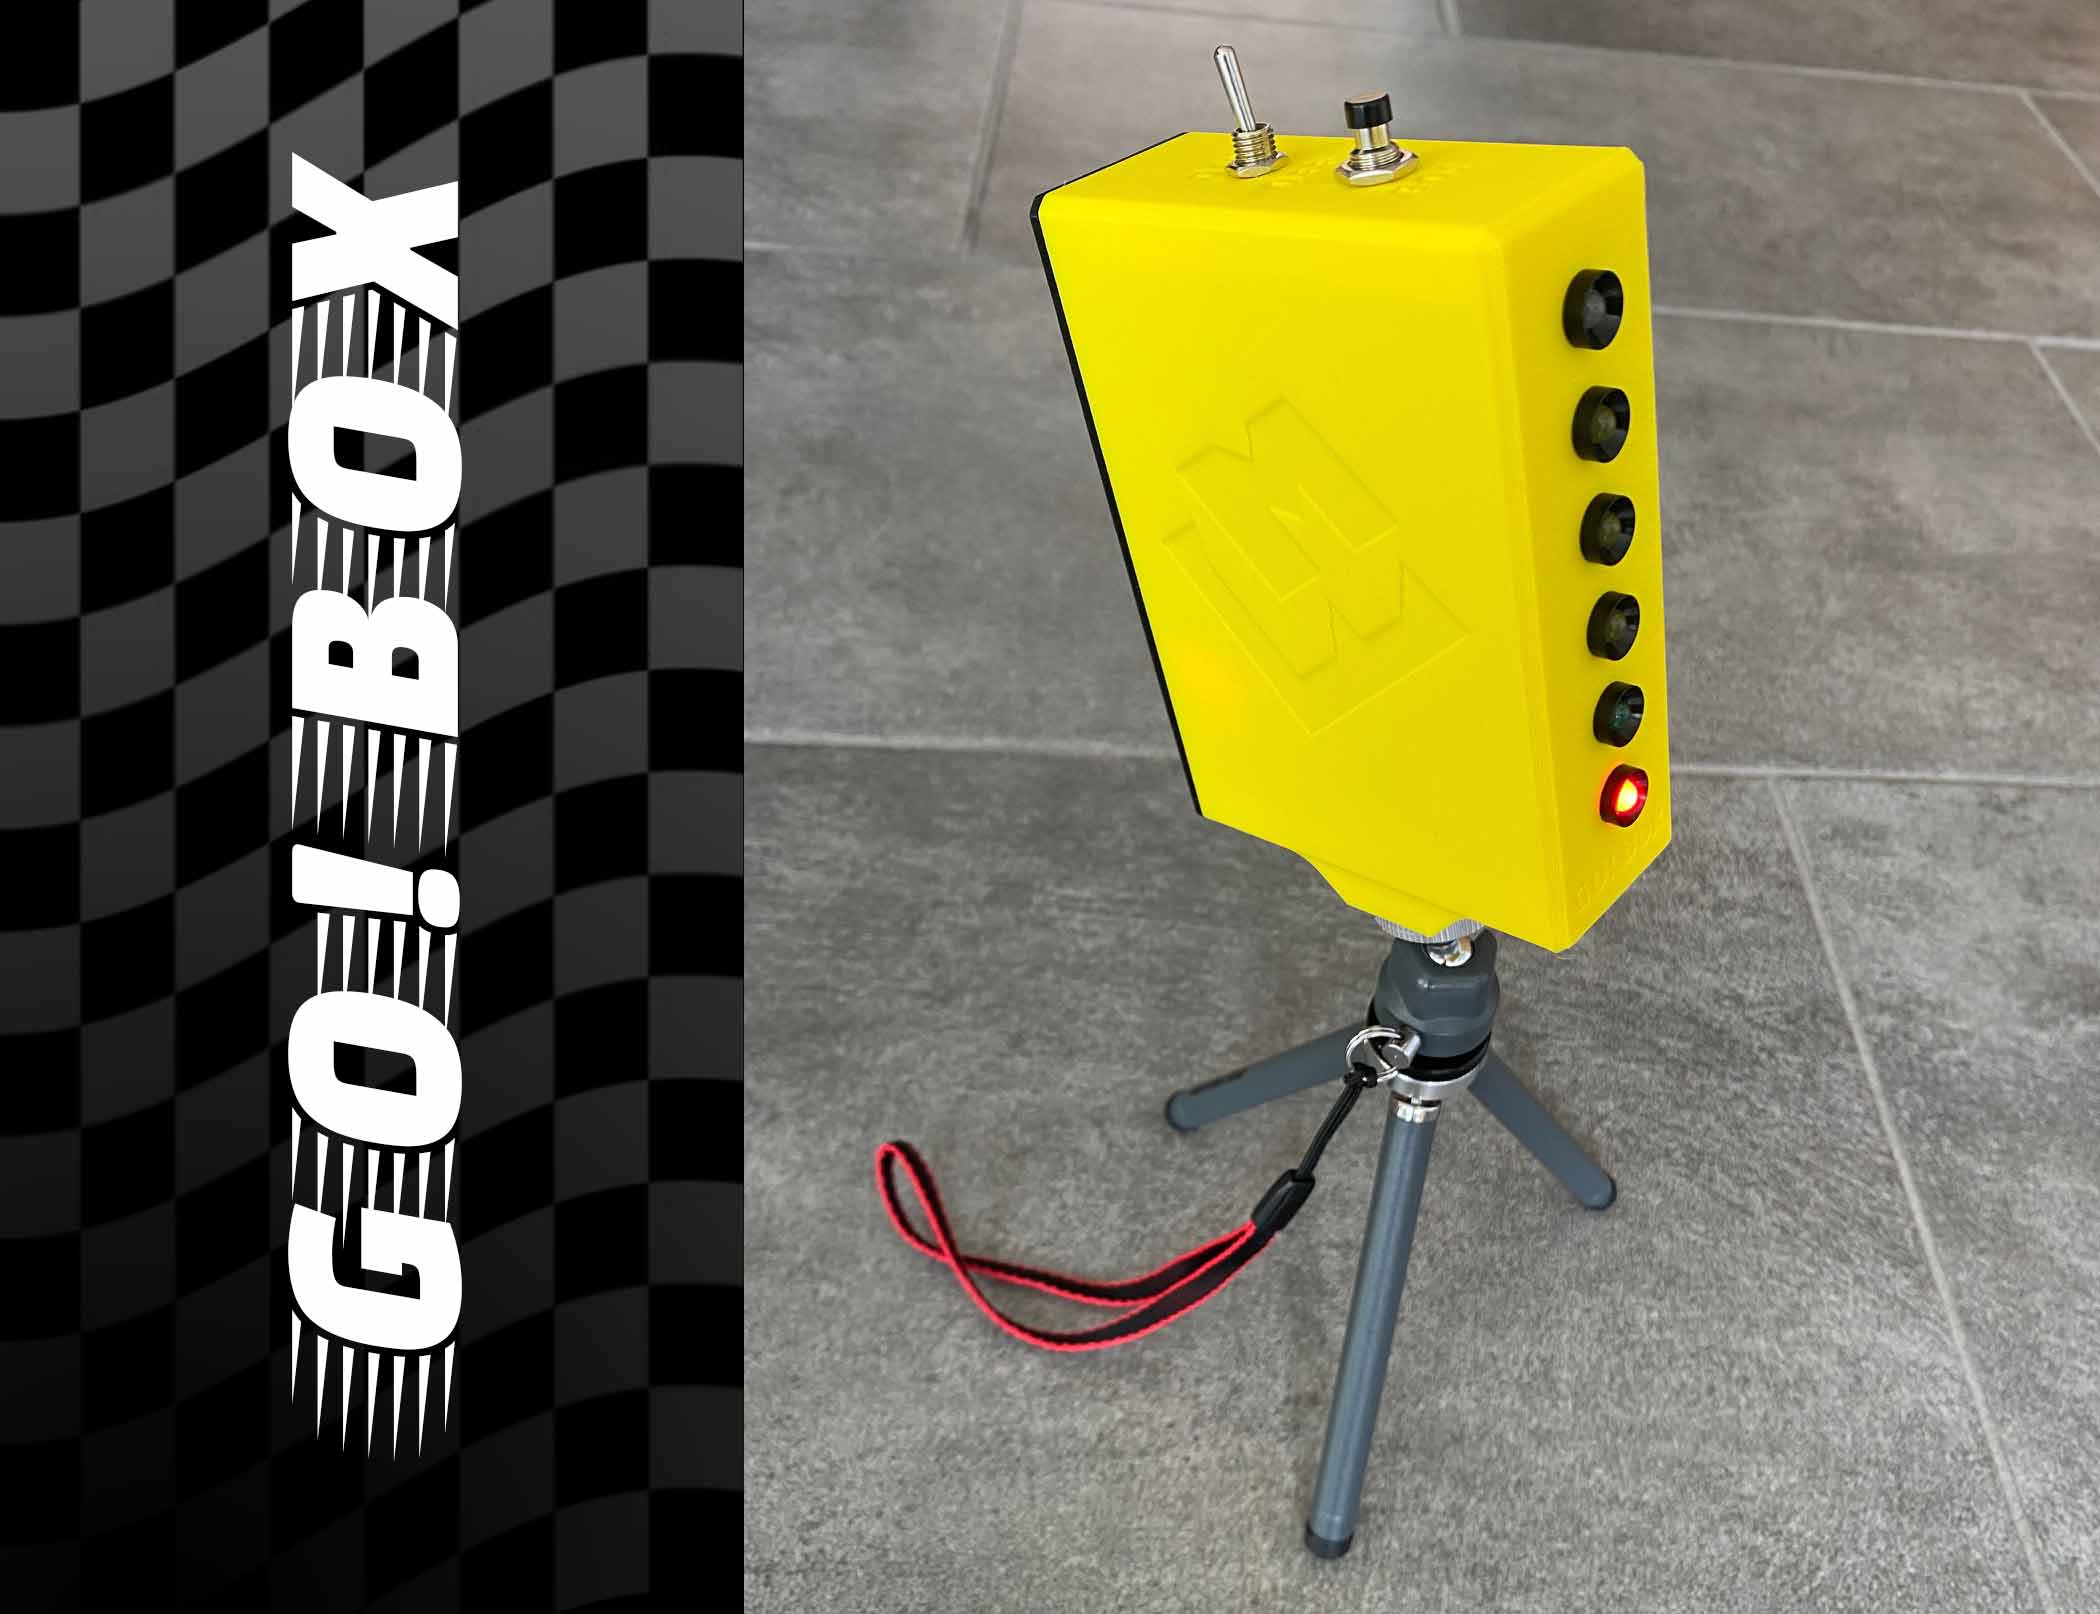 GO! Box - Drag-Race Start Light with Arduino